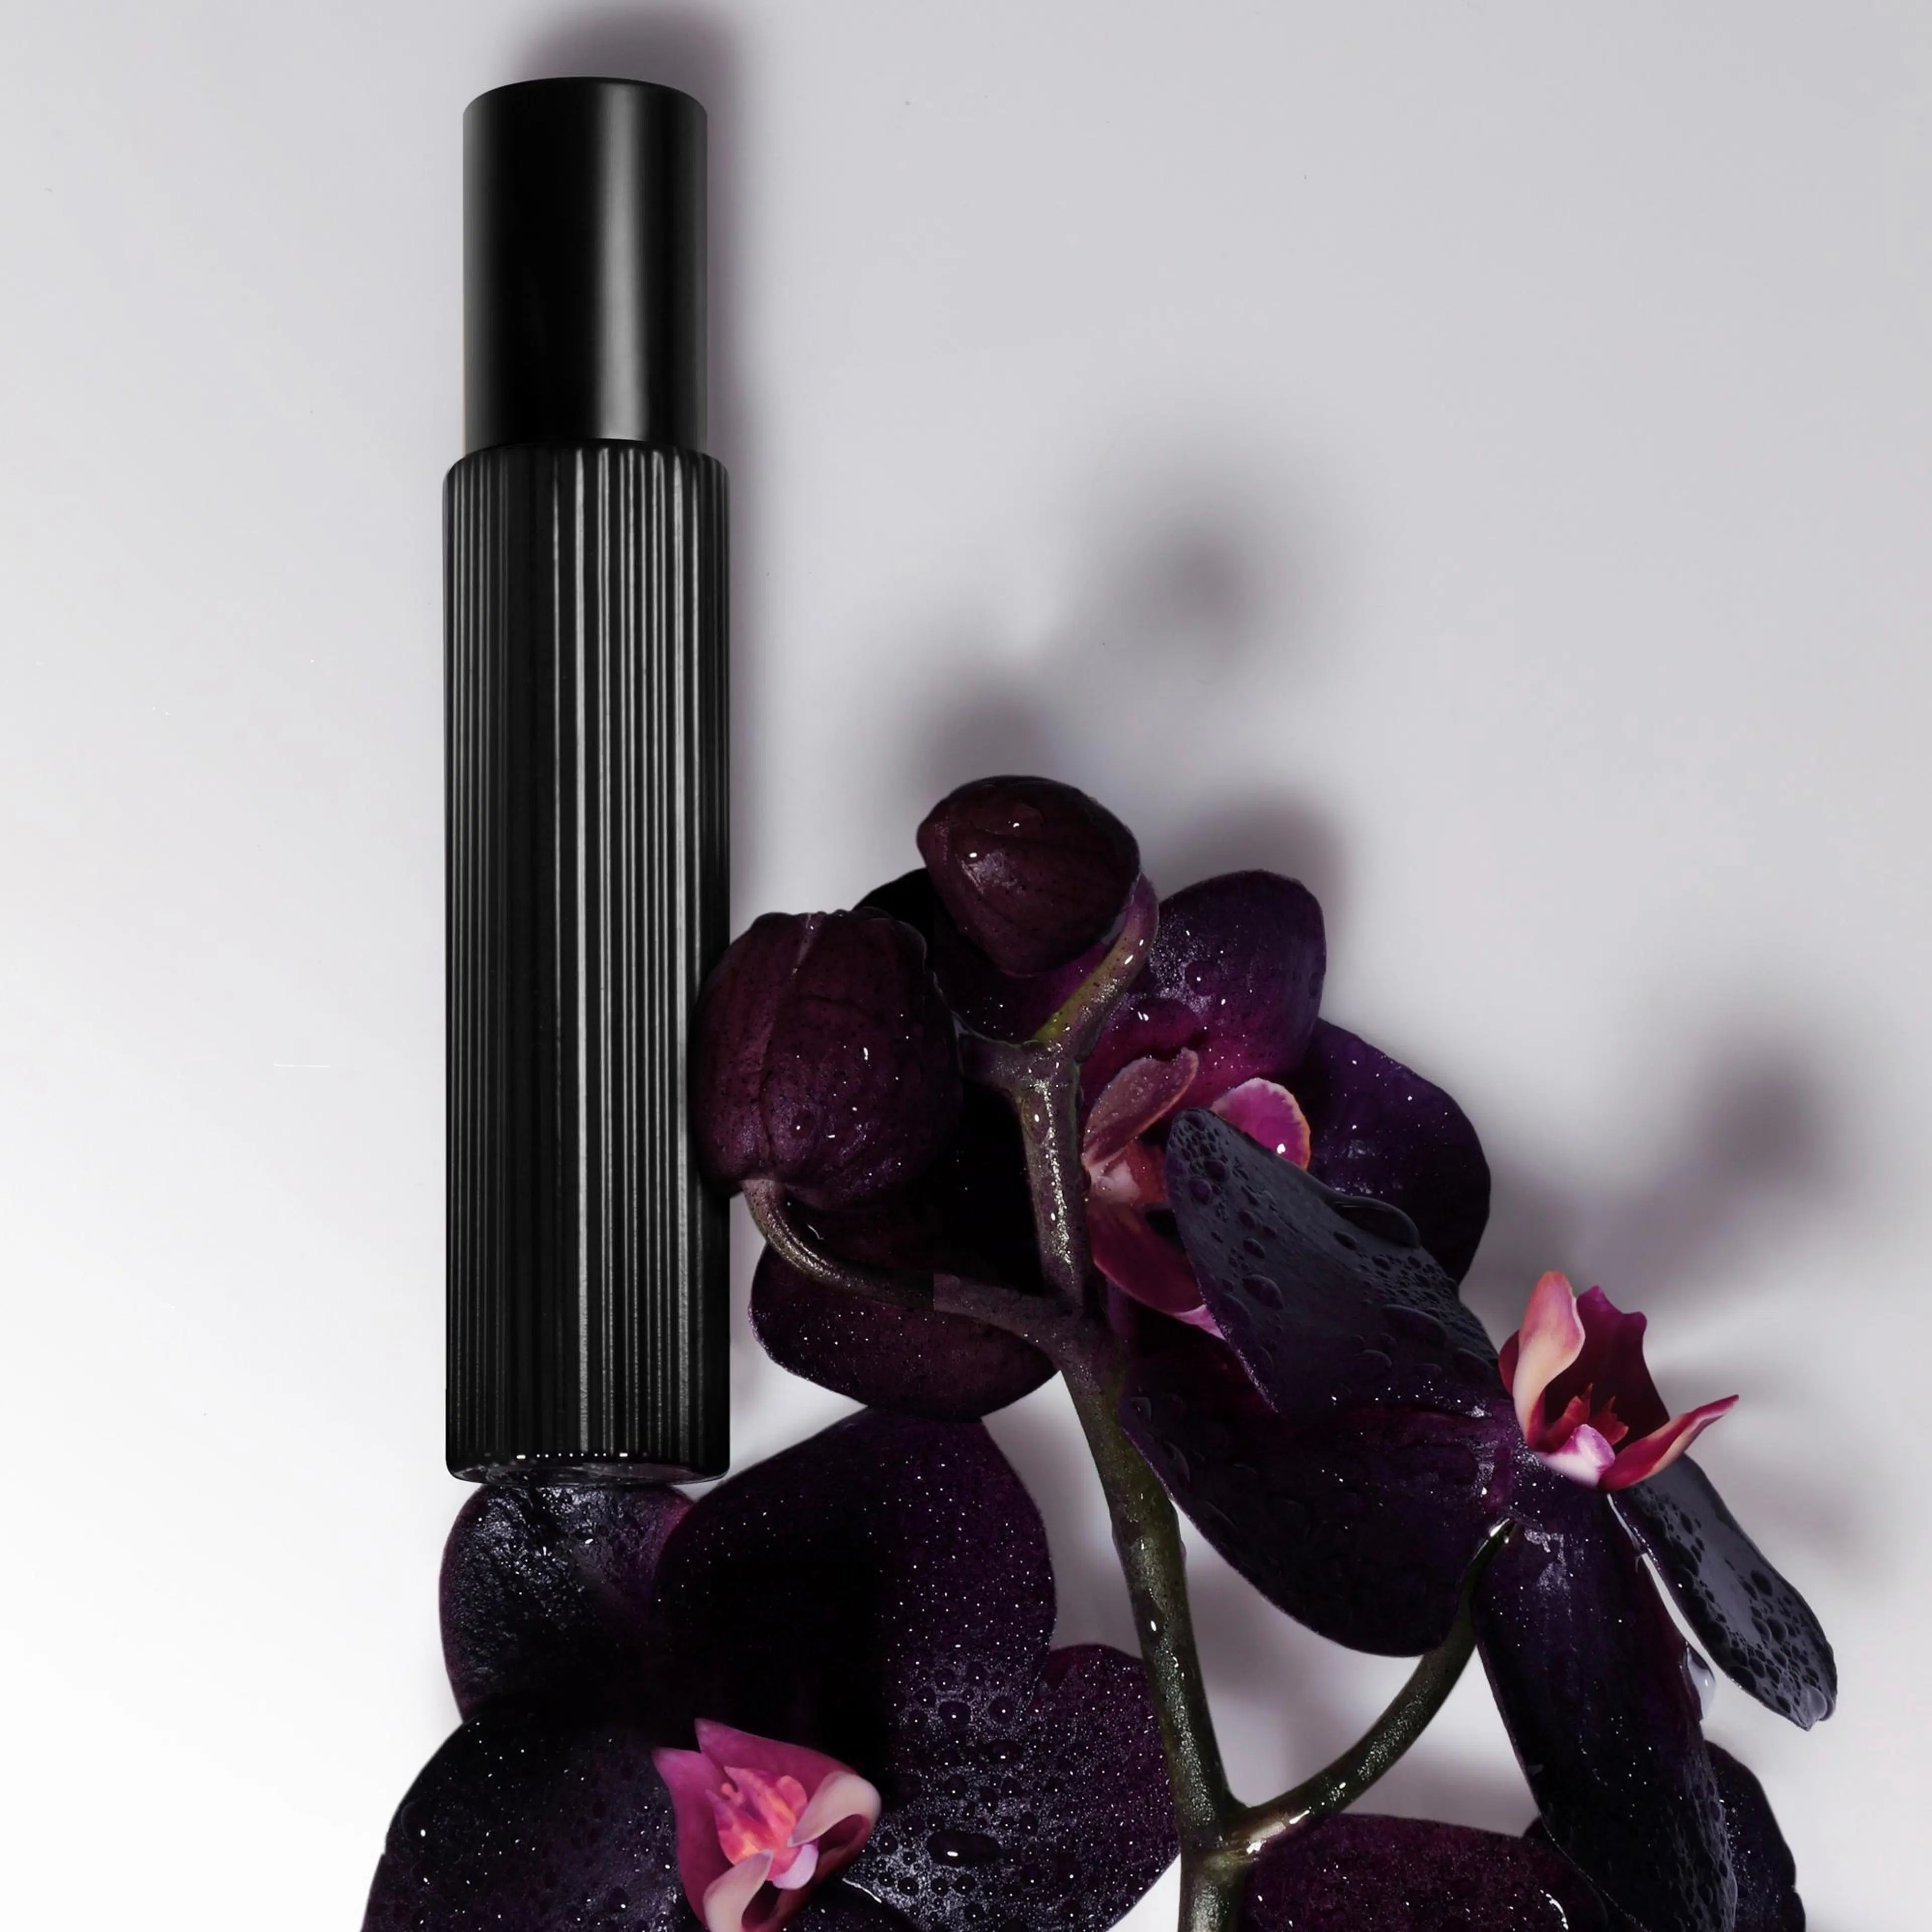 Tom Ford Black Orchid Eau de Parfum Travel Spray tuoksu 10 ml